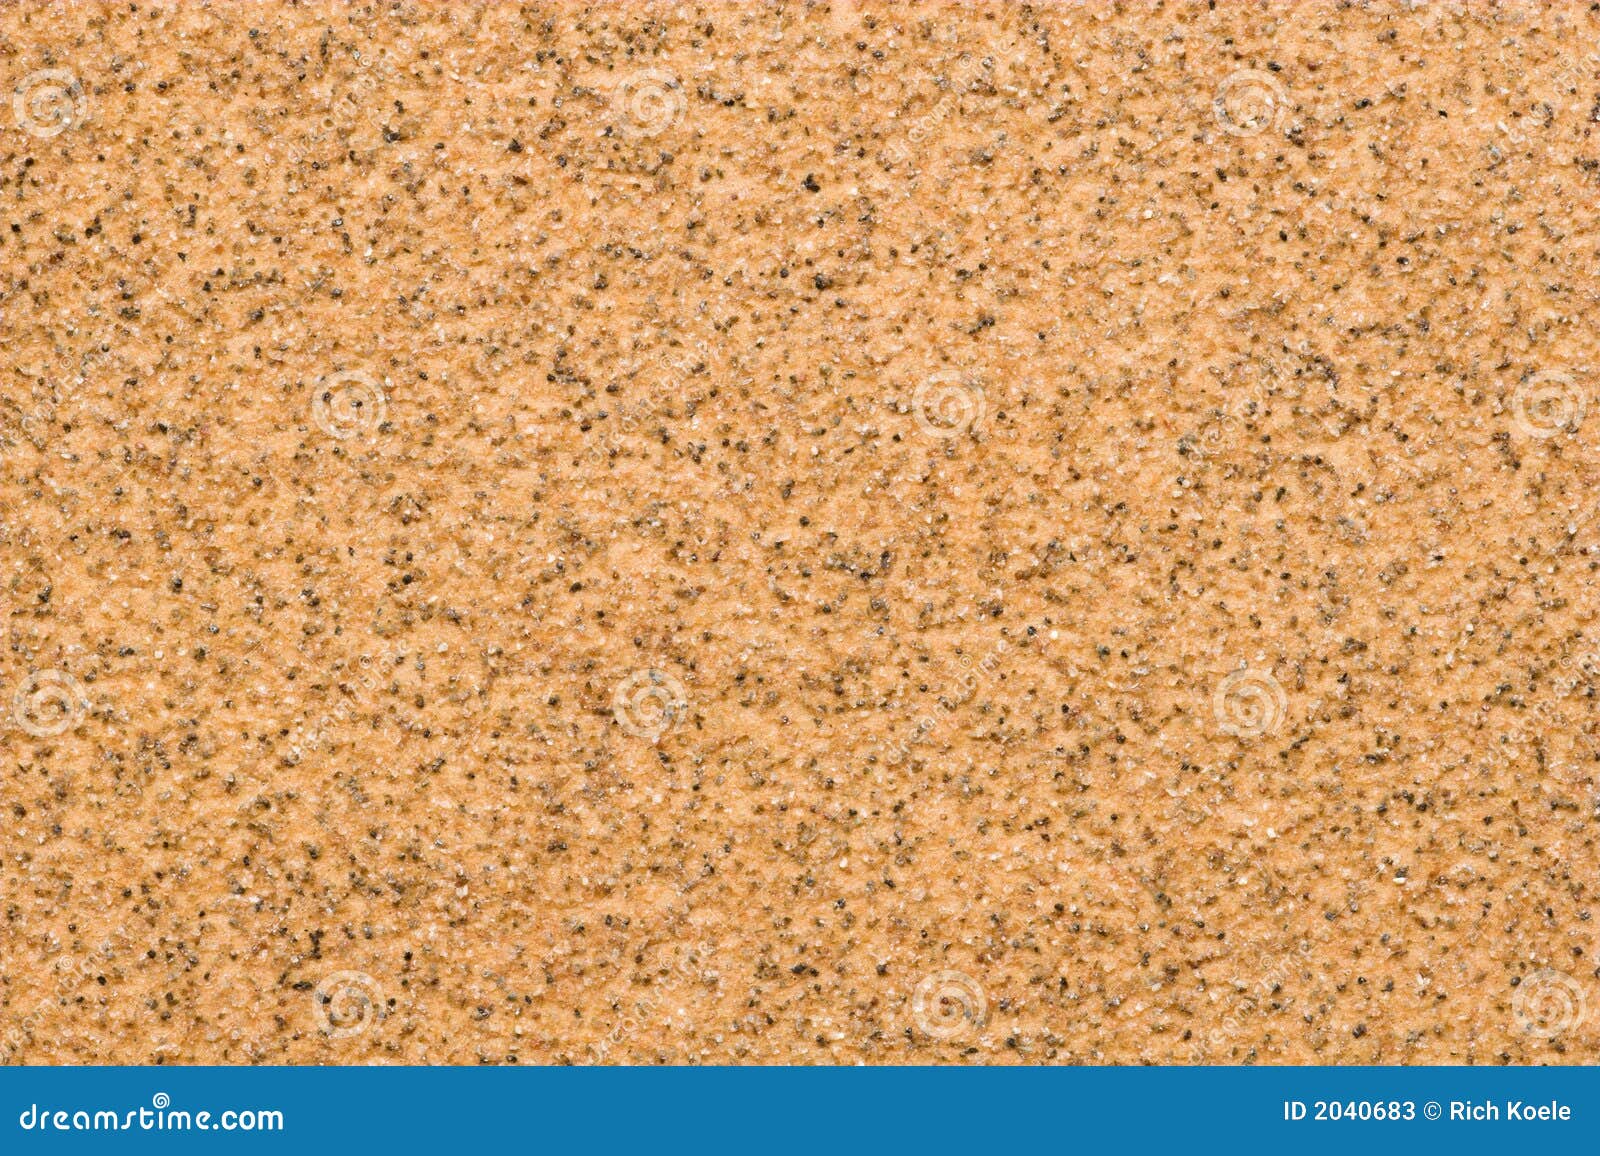 Sandpaper Background stock image. Image of rough